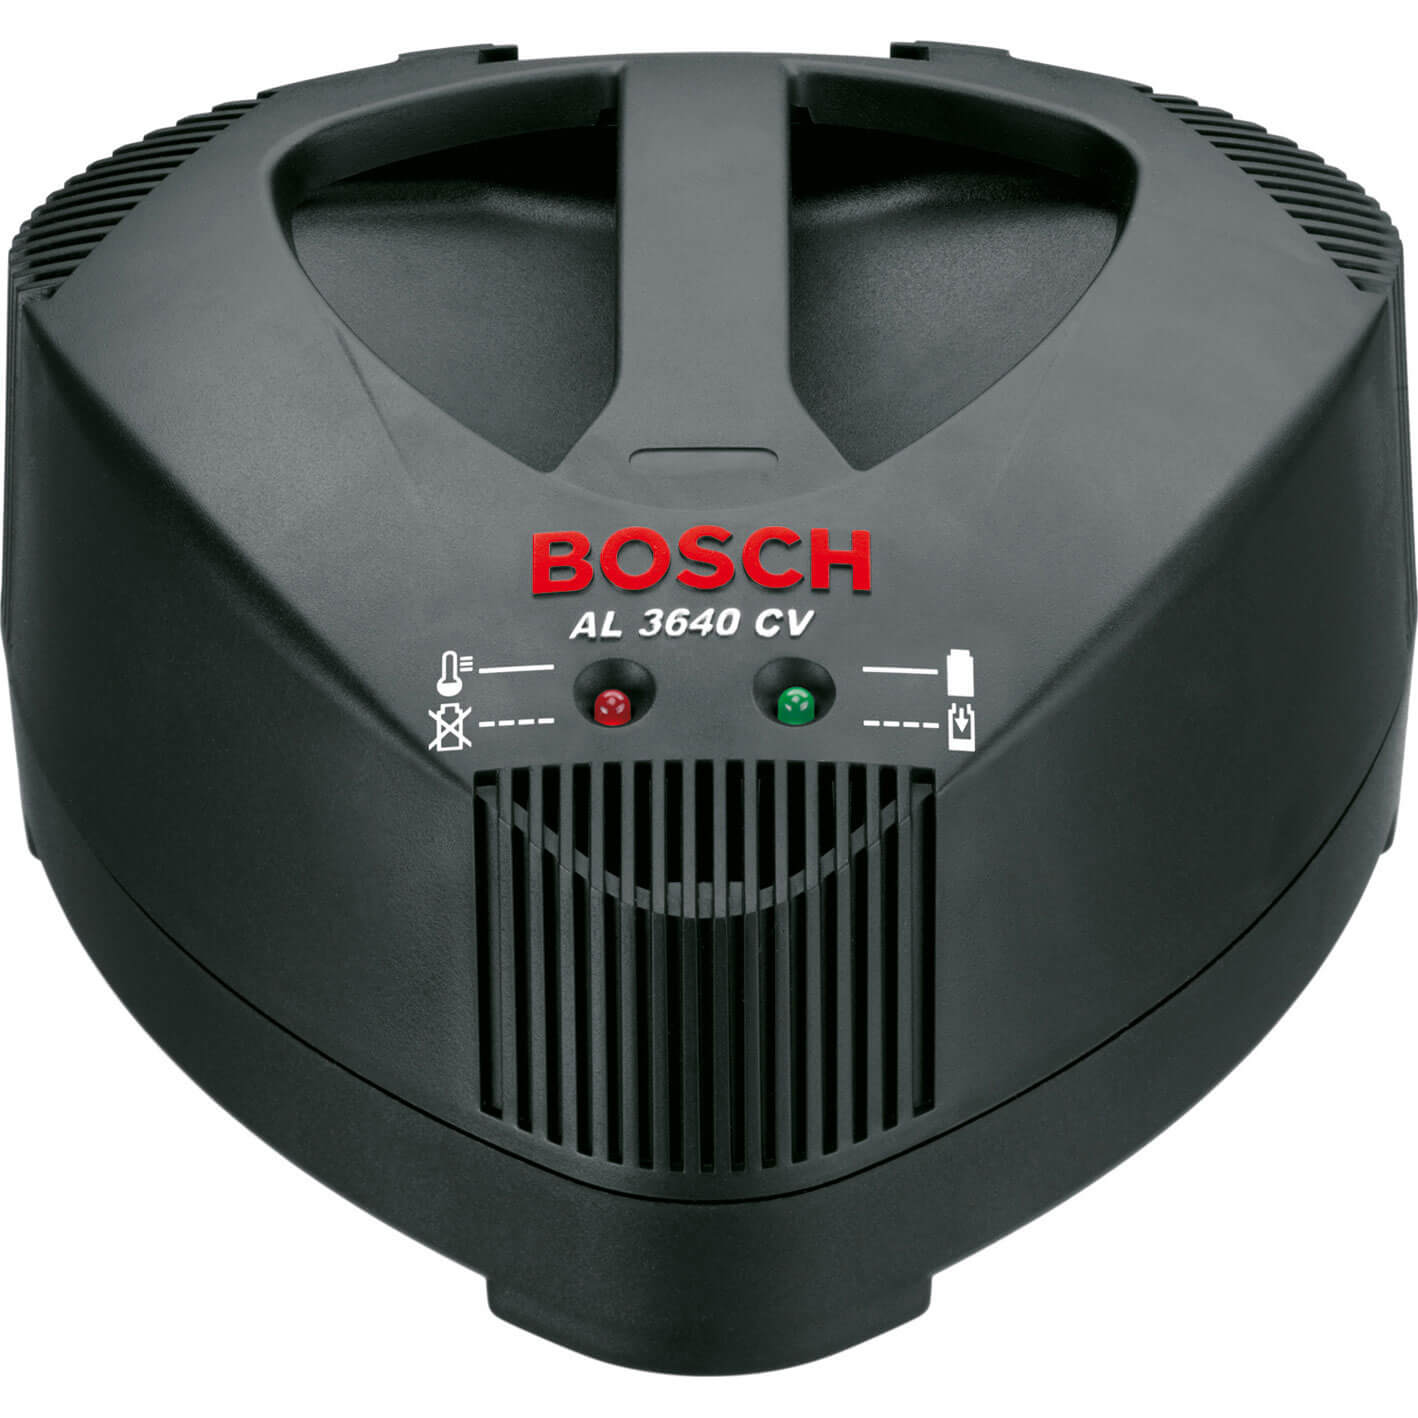 Bosch AL3640 CV 36v Quick Battery Charger for